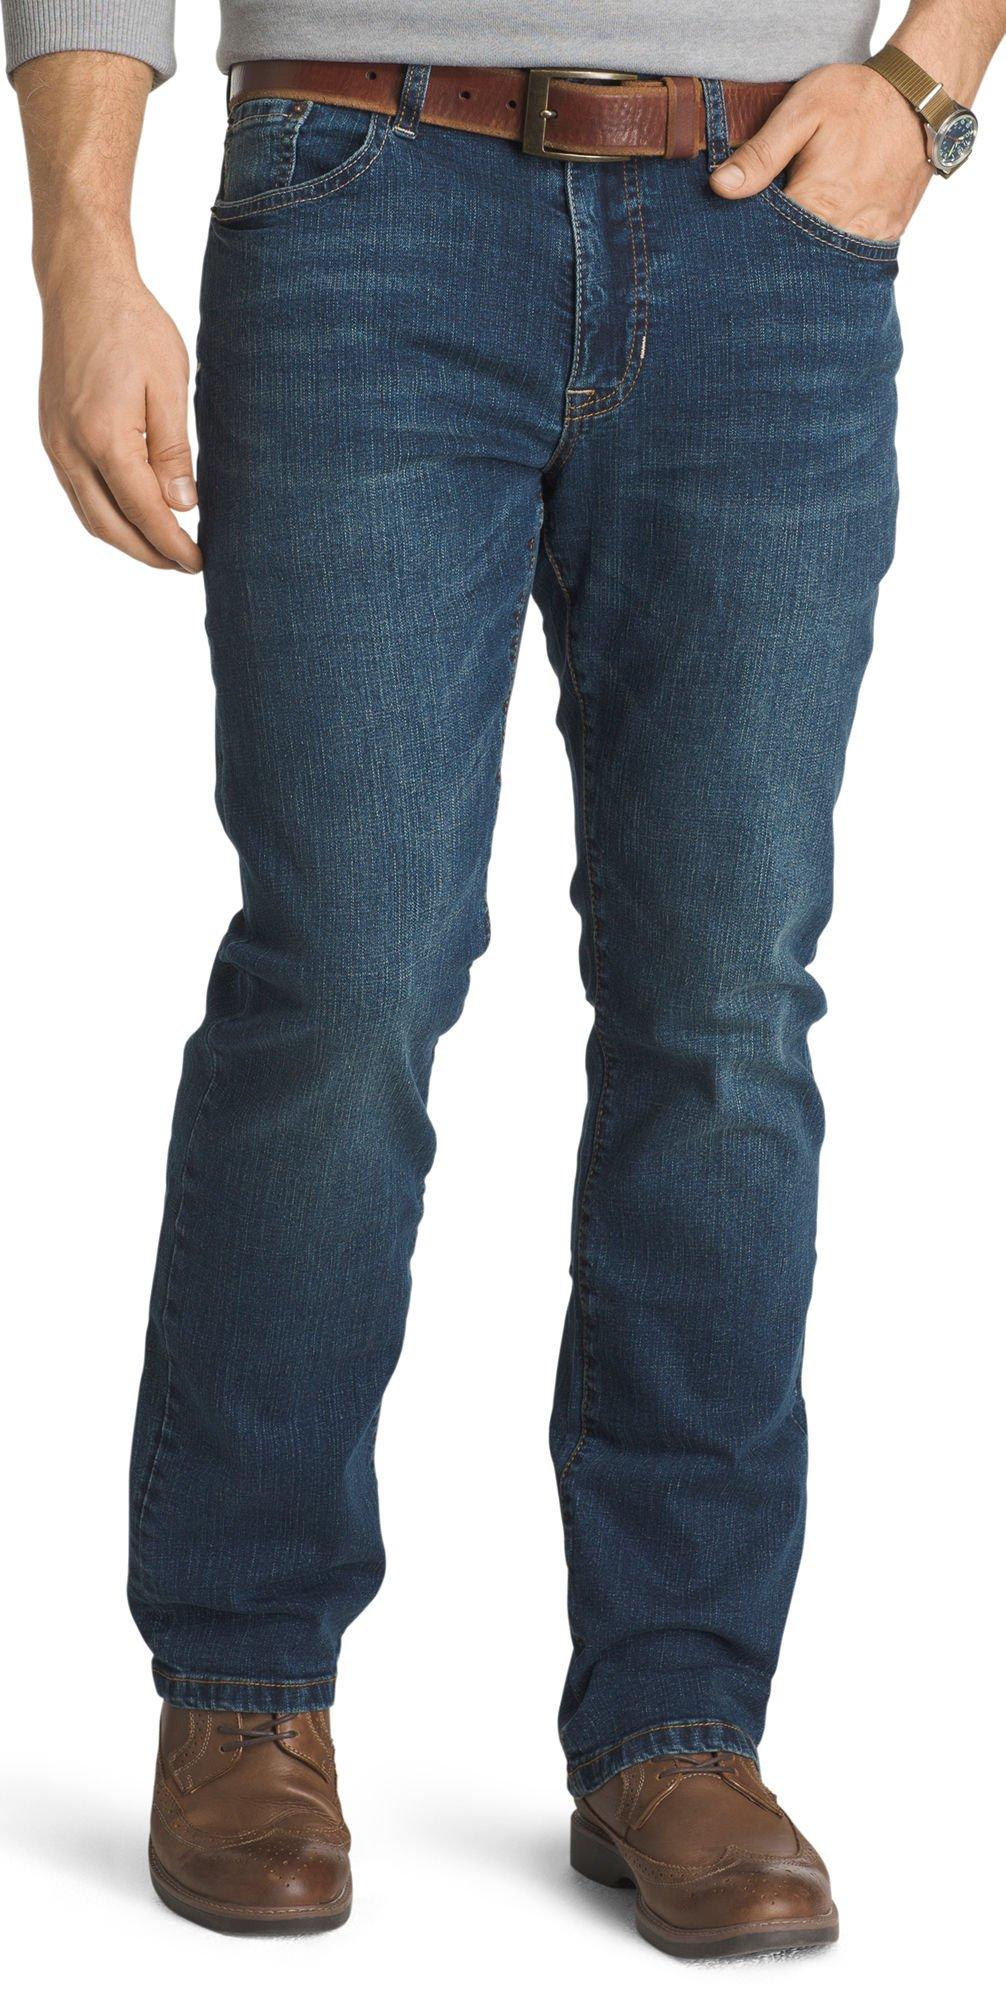 izod men's comfort stretch denim jeans